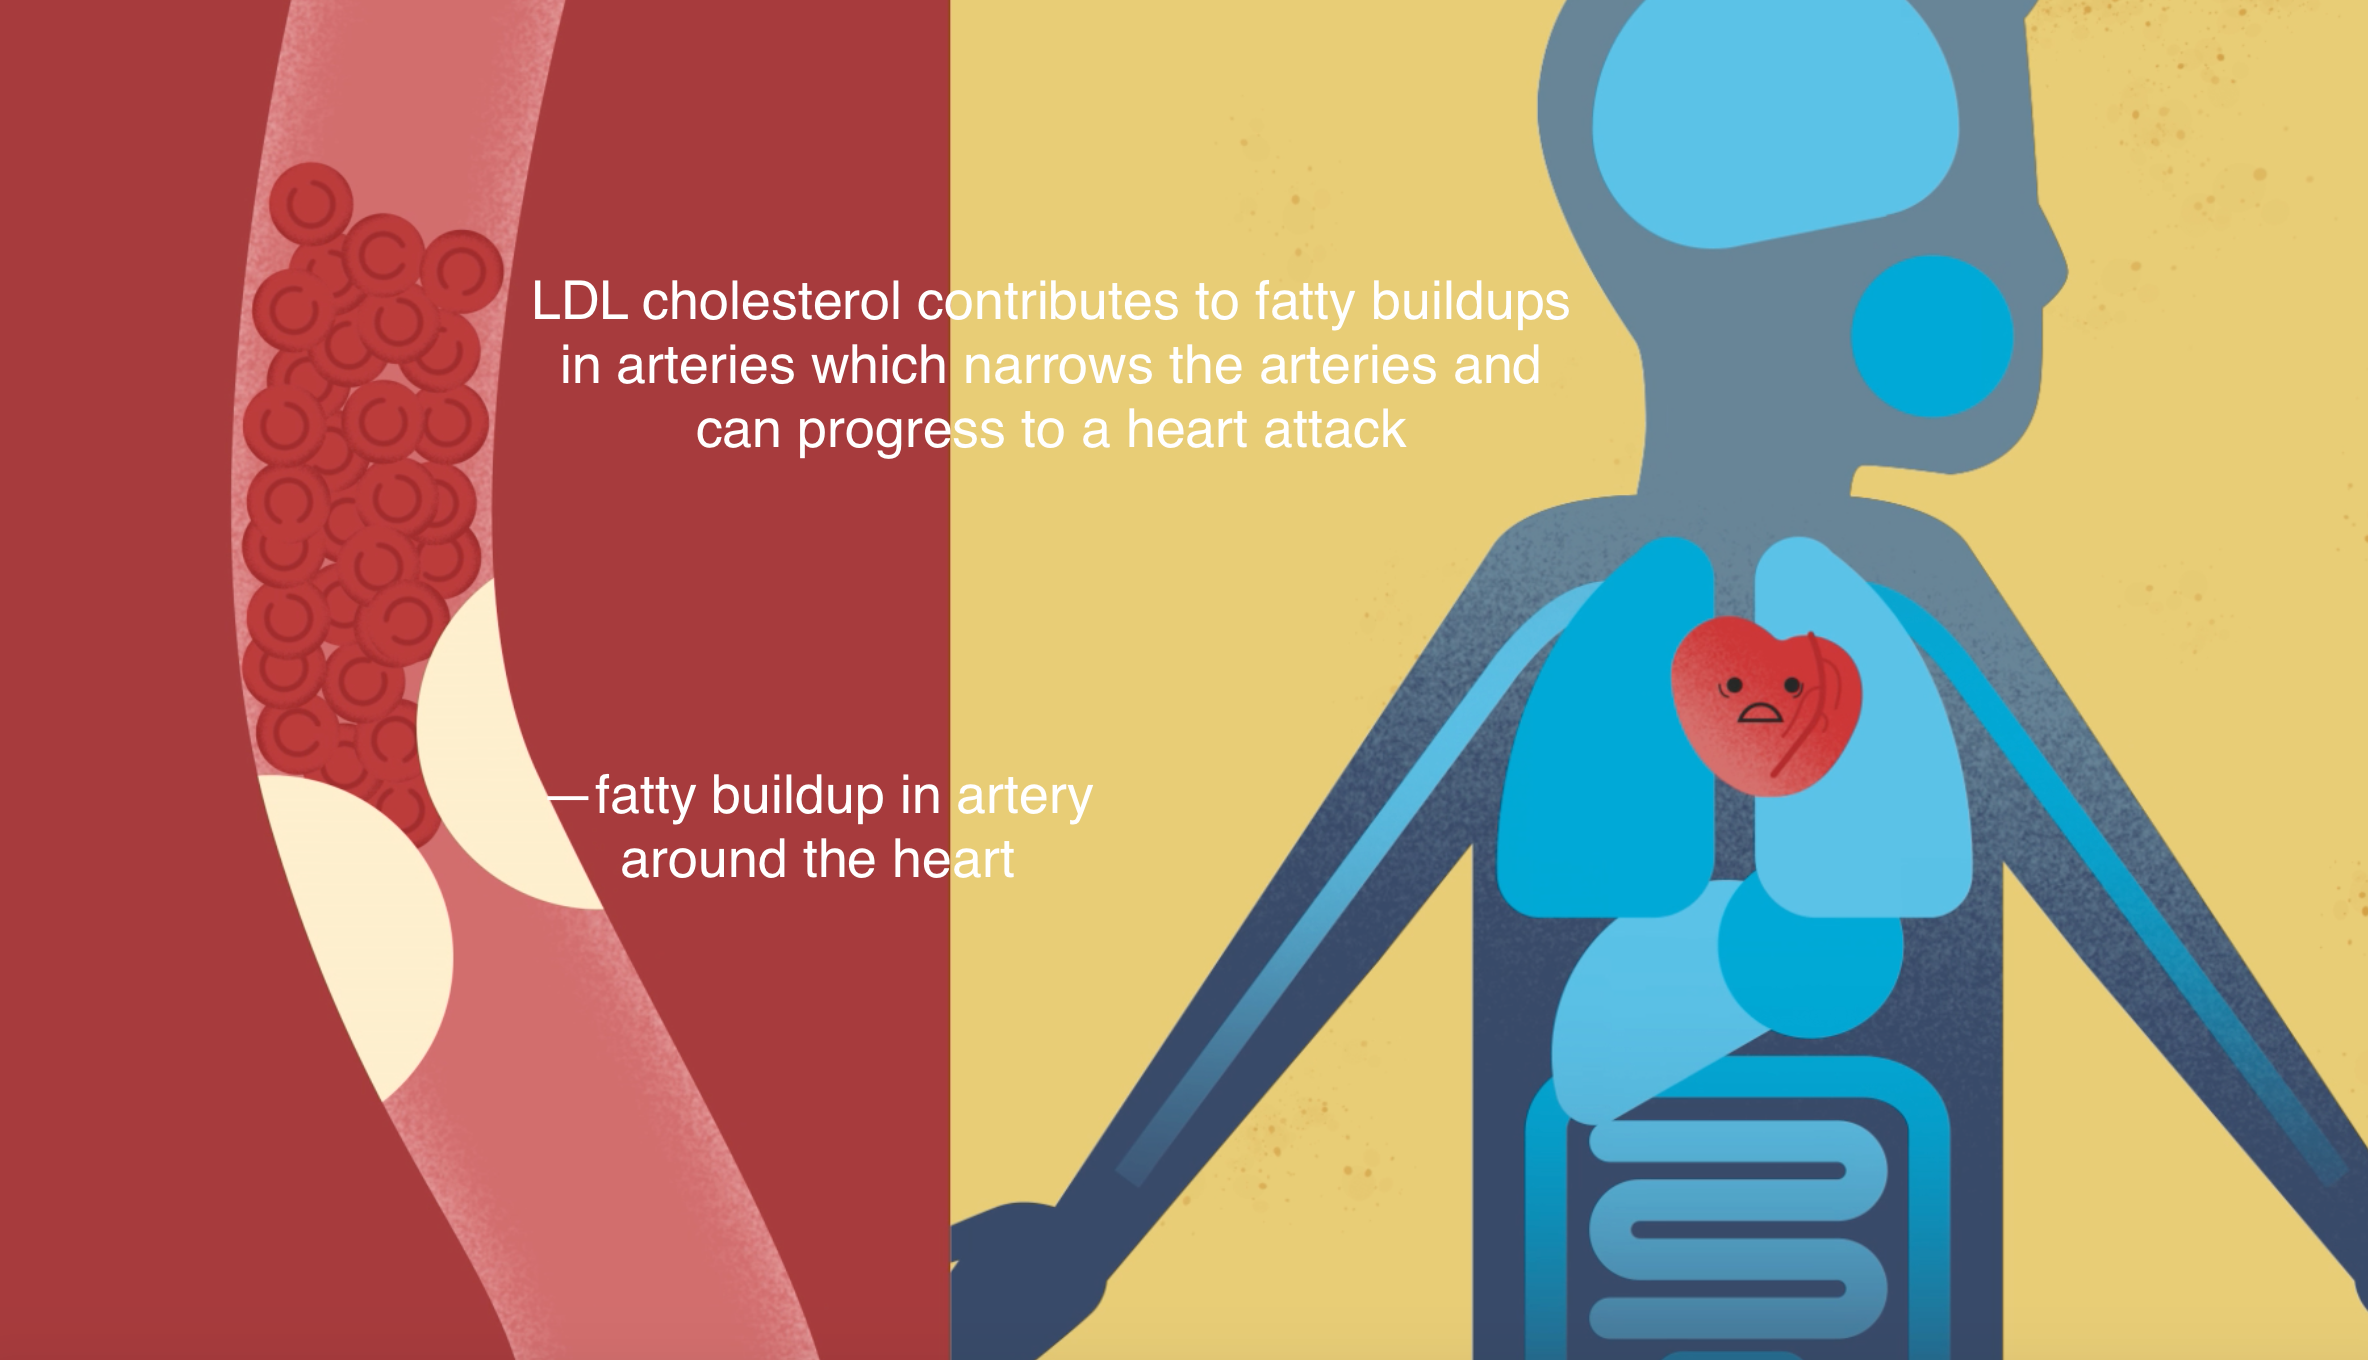 LDL cholesterol fatty buildup in artery around heart